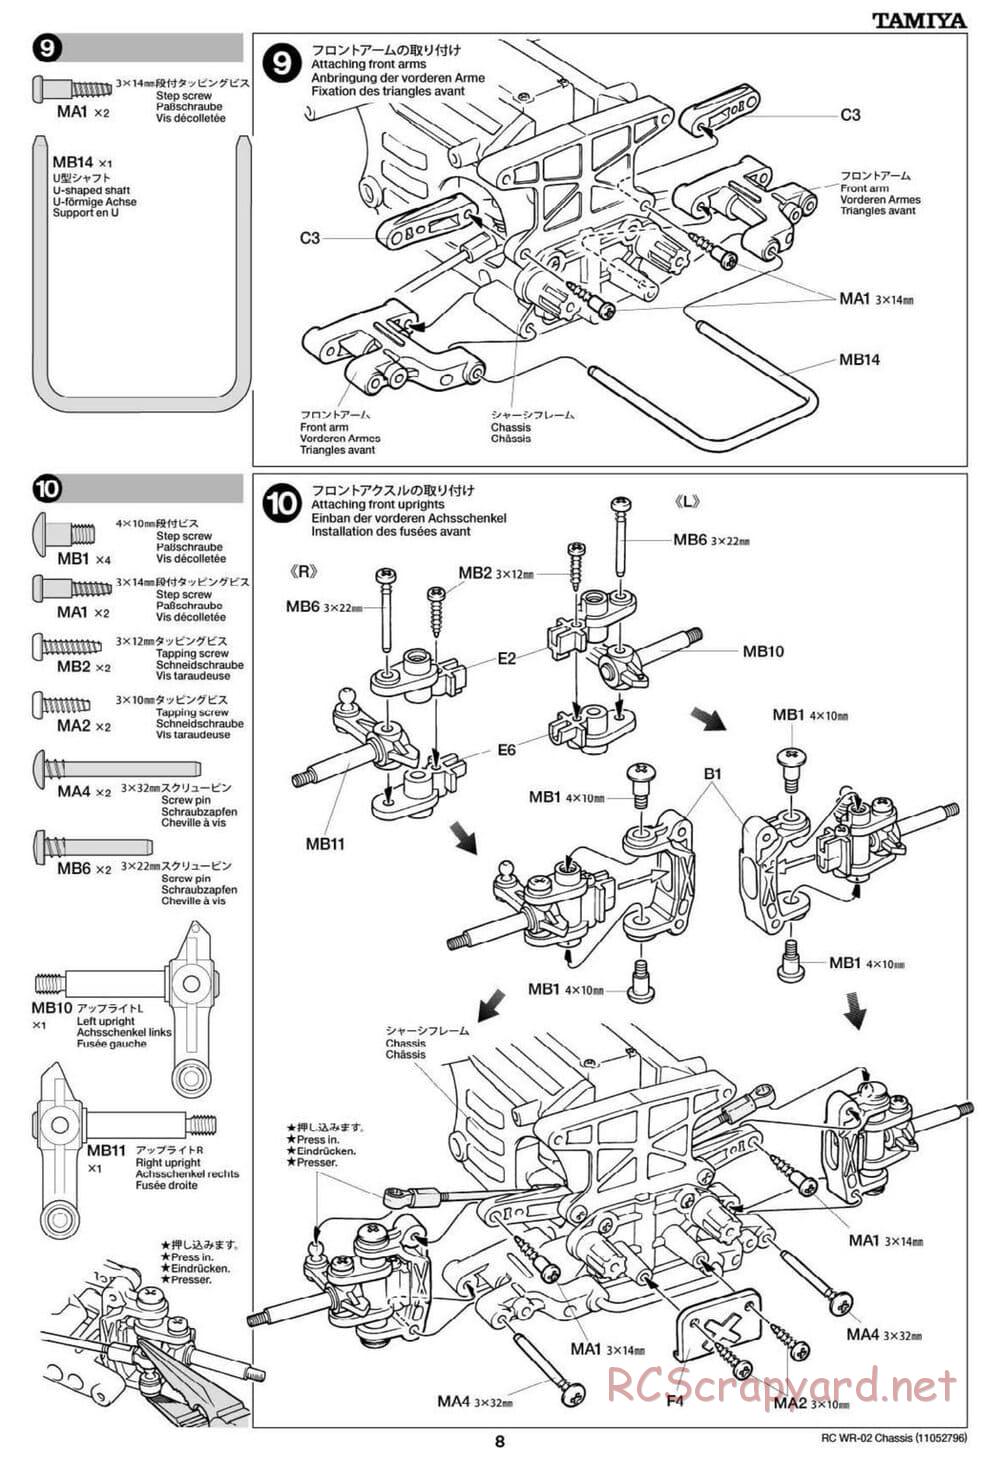 Tamiya - WR-02 Chassis - Manual - Page 8